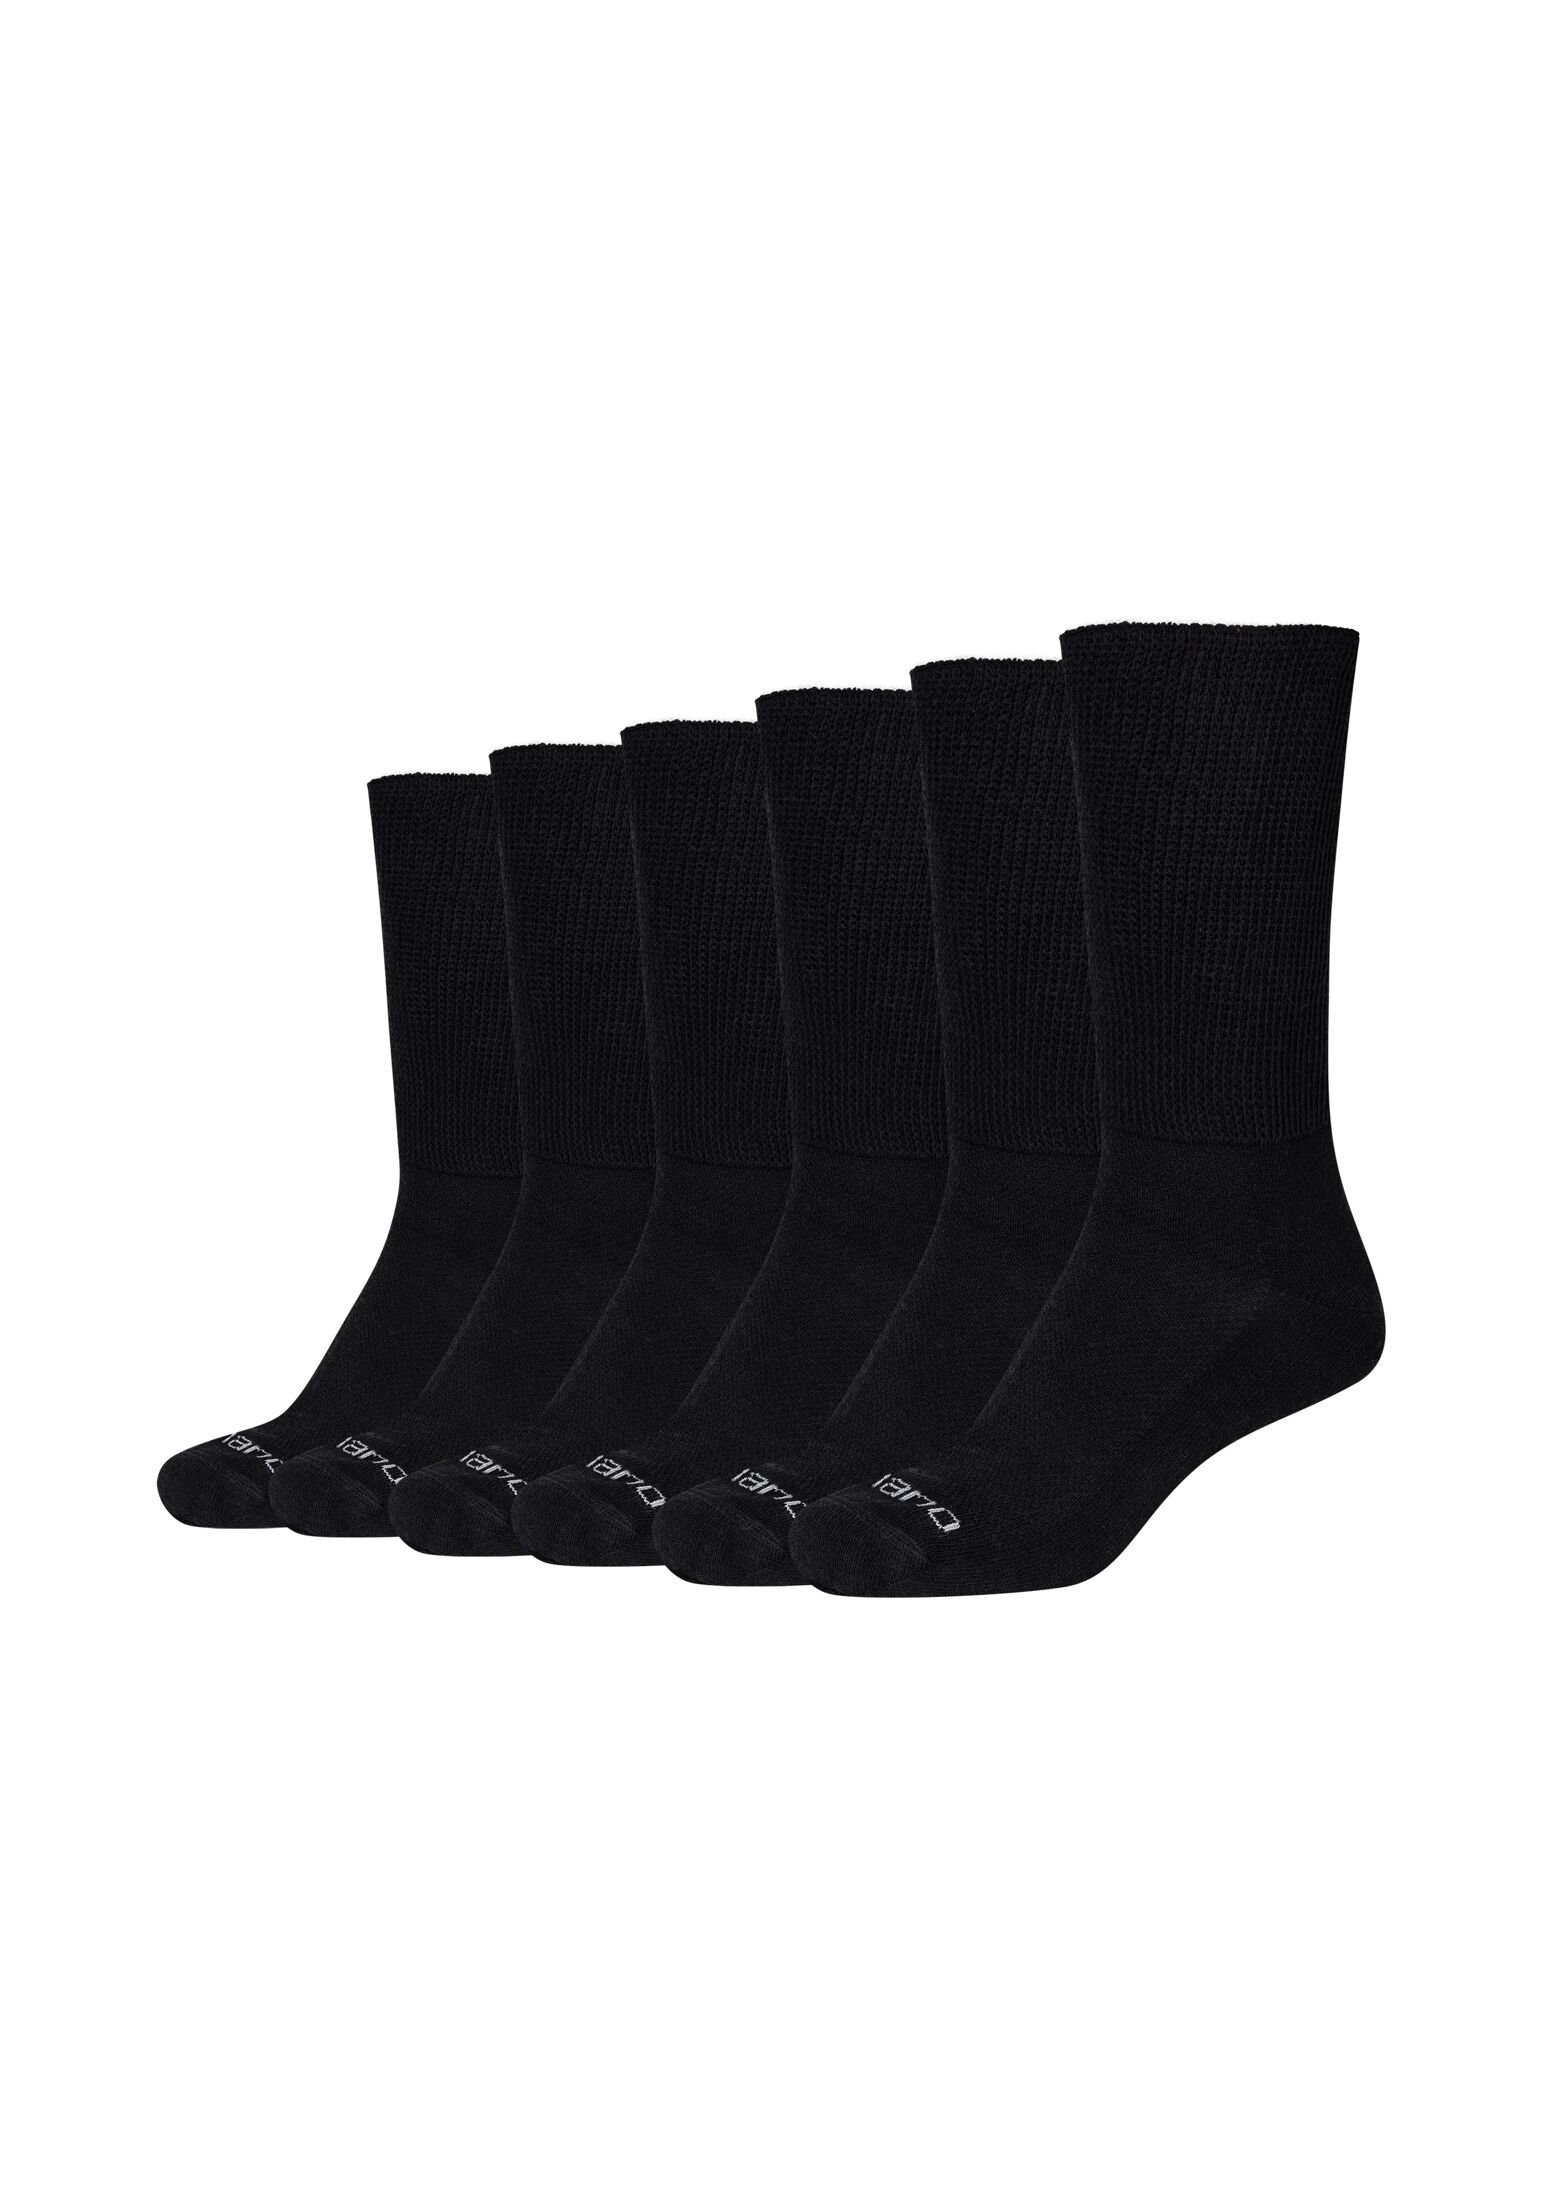 Camano Socken Diabetikersocken 6er Pack black